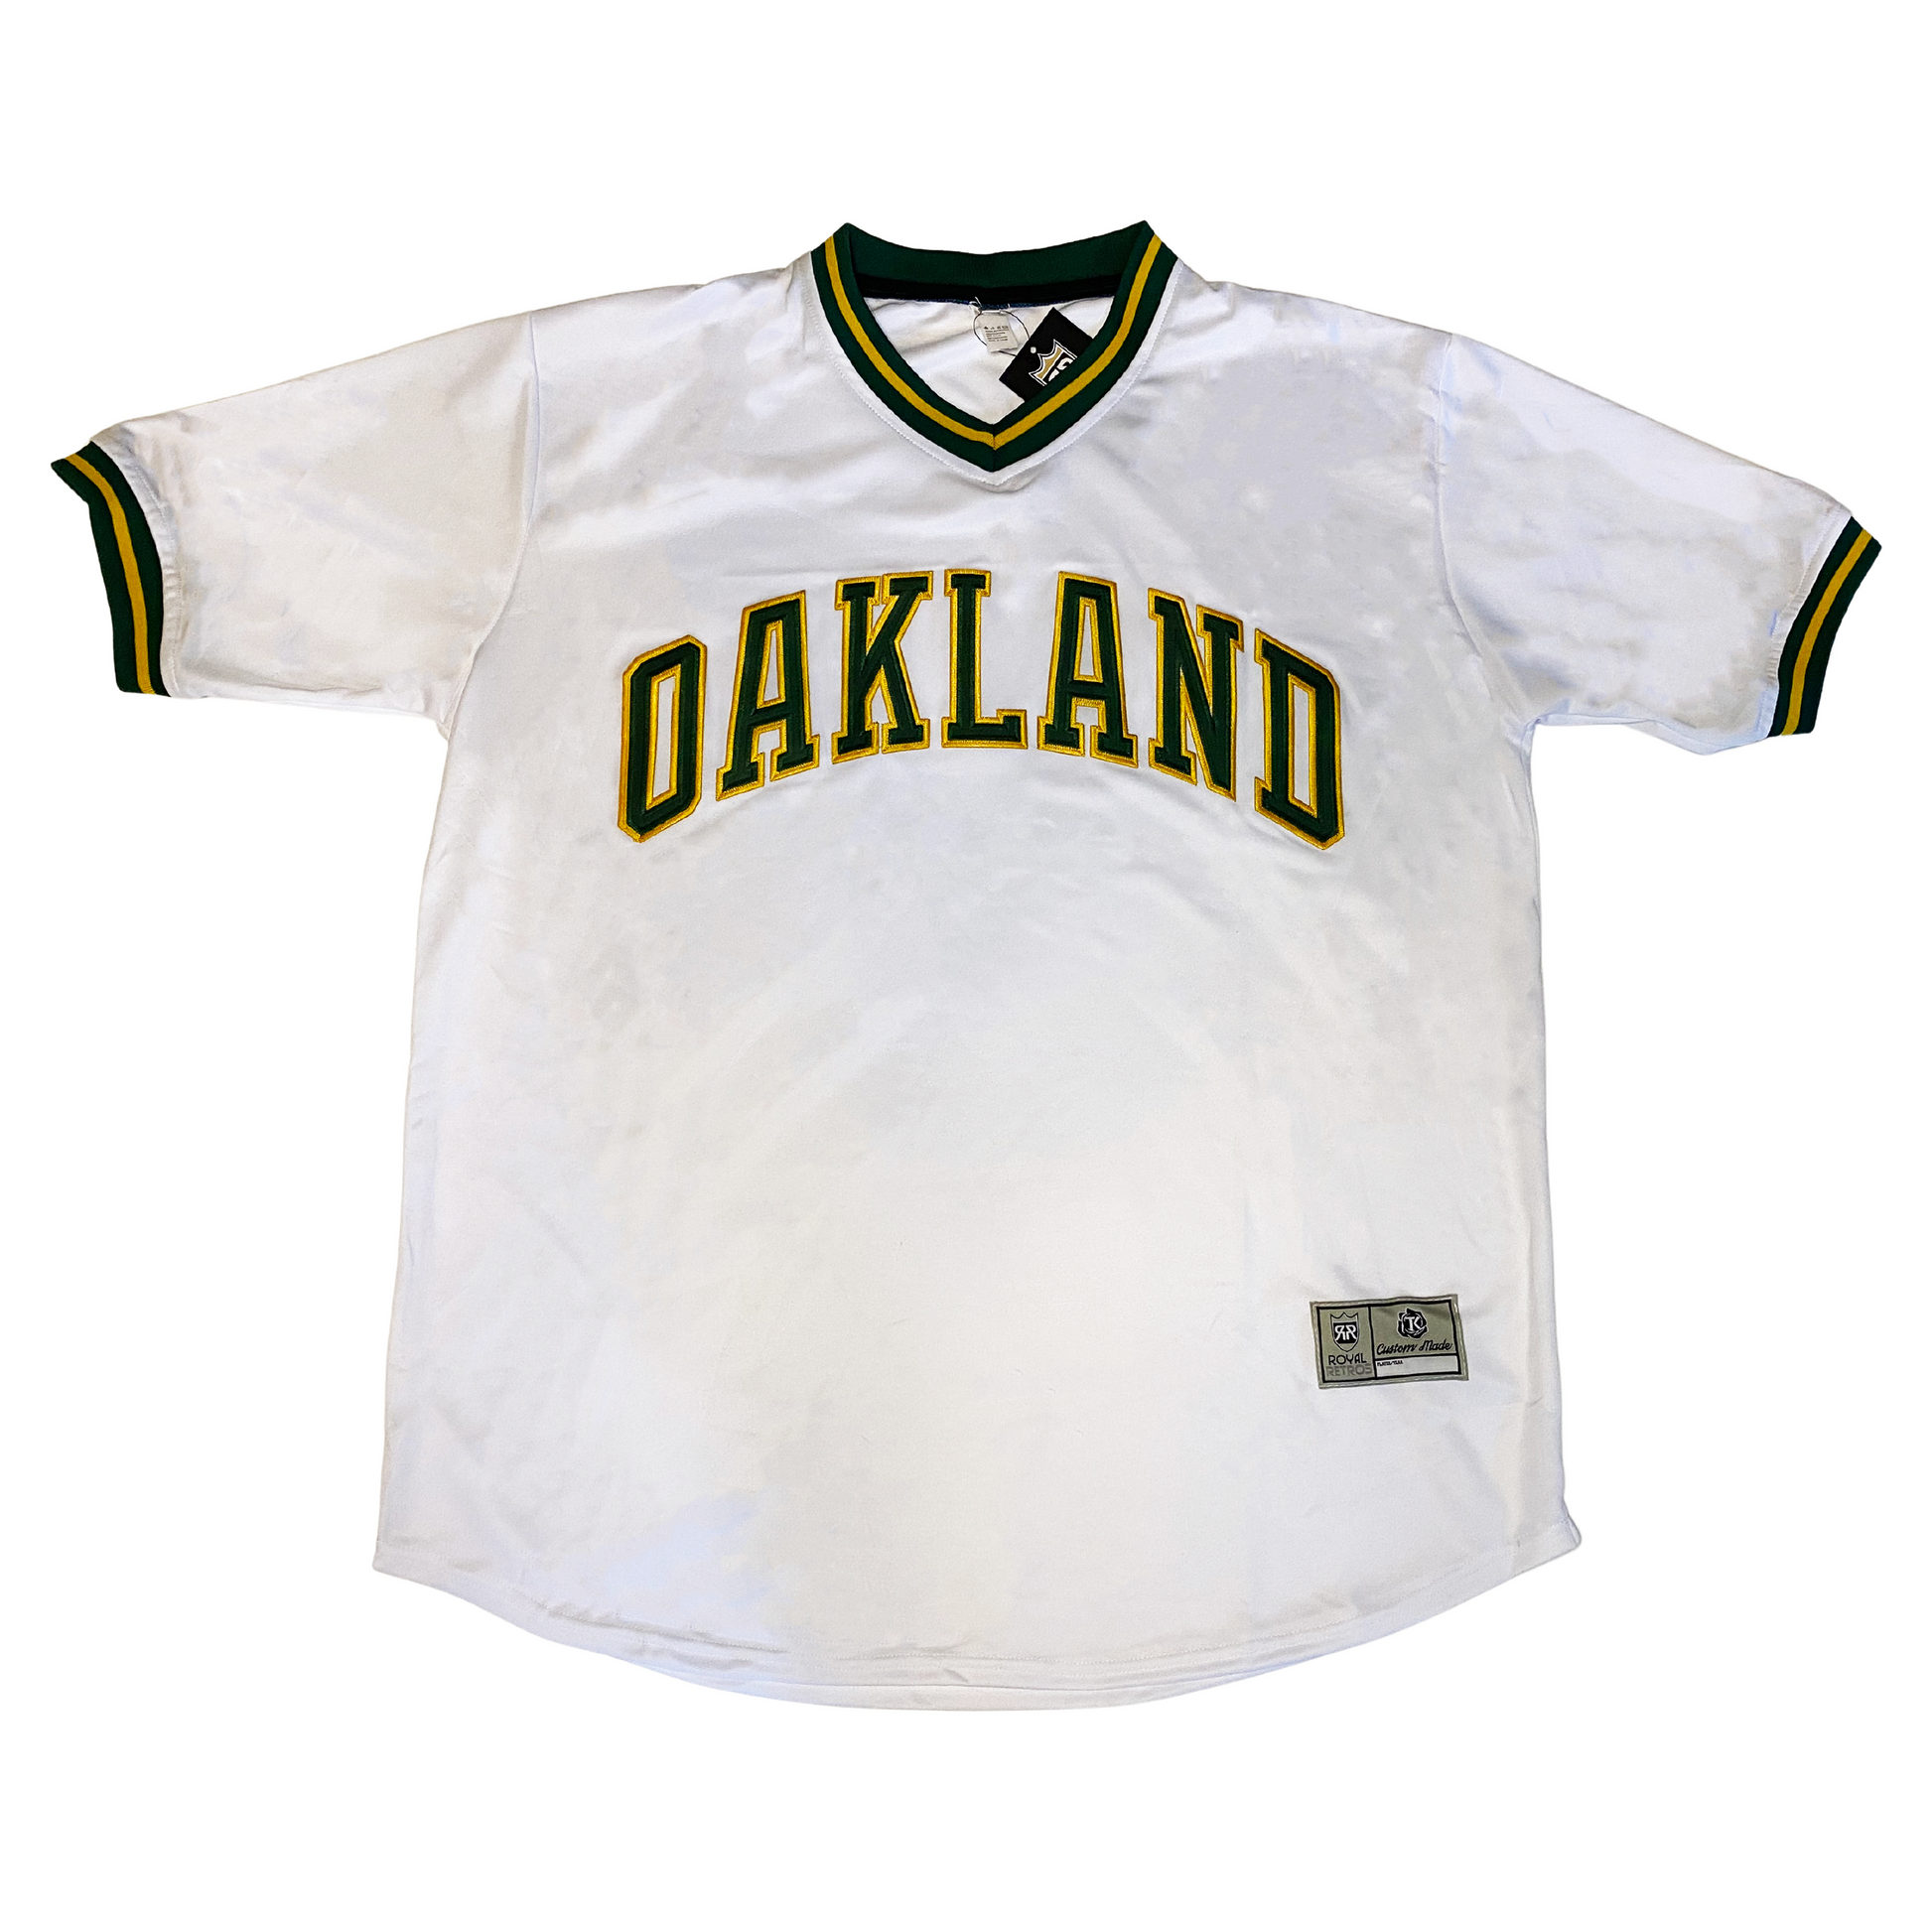 oakland a's white uniforms